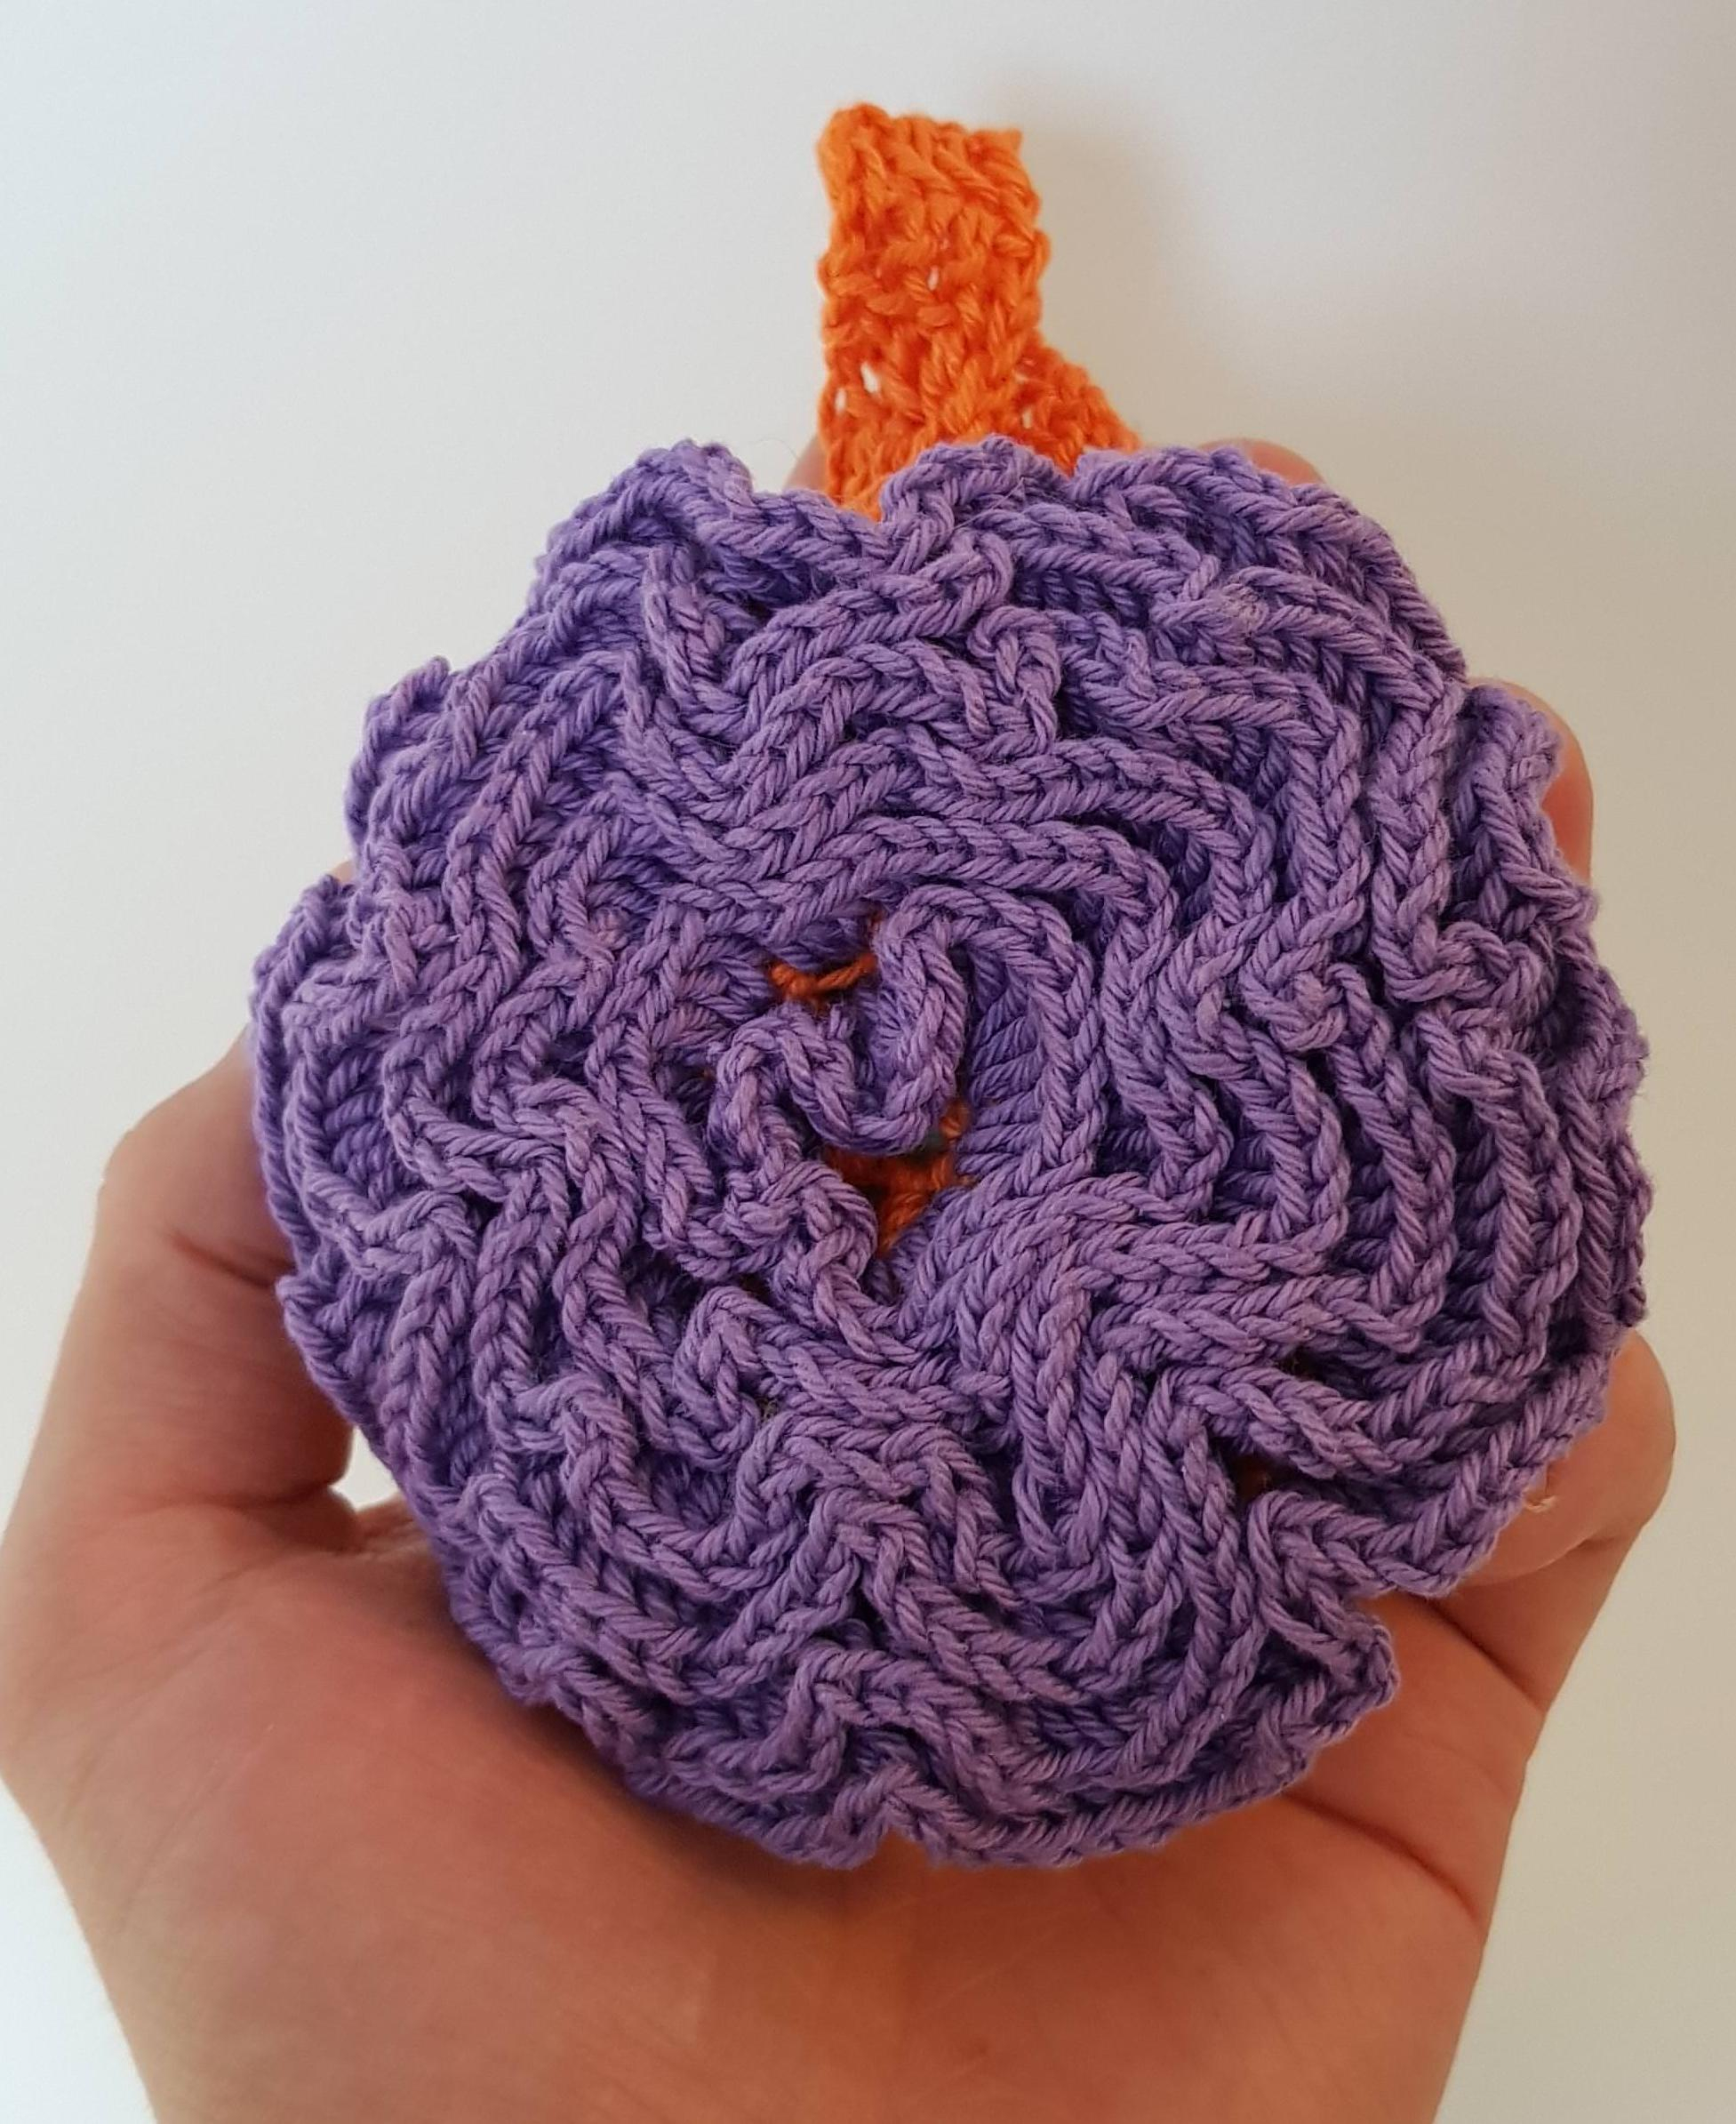 Crochet Spiral Scrubbie Pattern Spiral Near Loofah Soap Scrubbie Album On Imgur